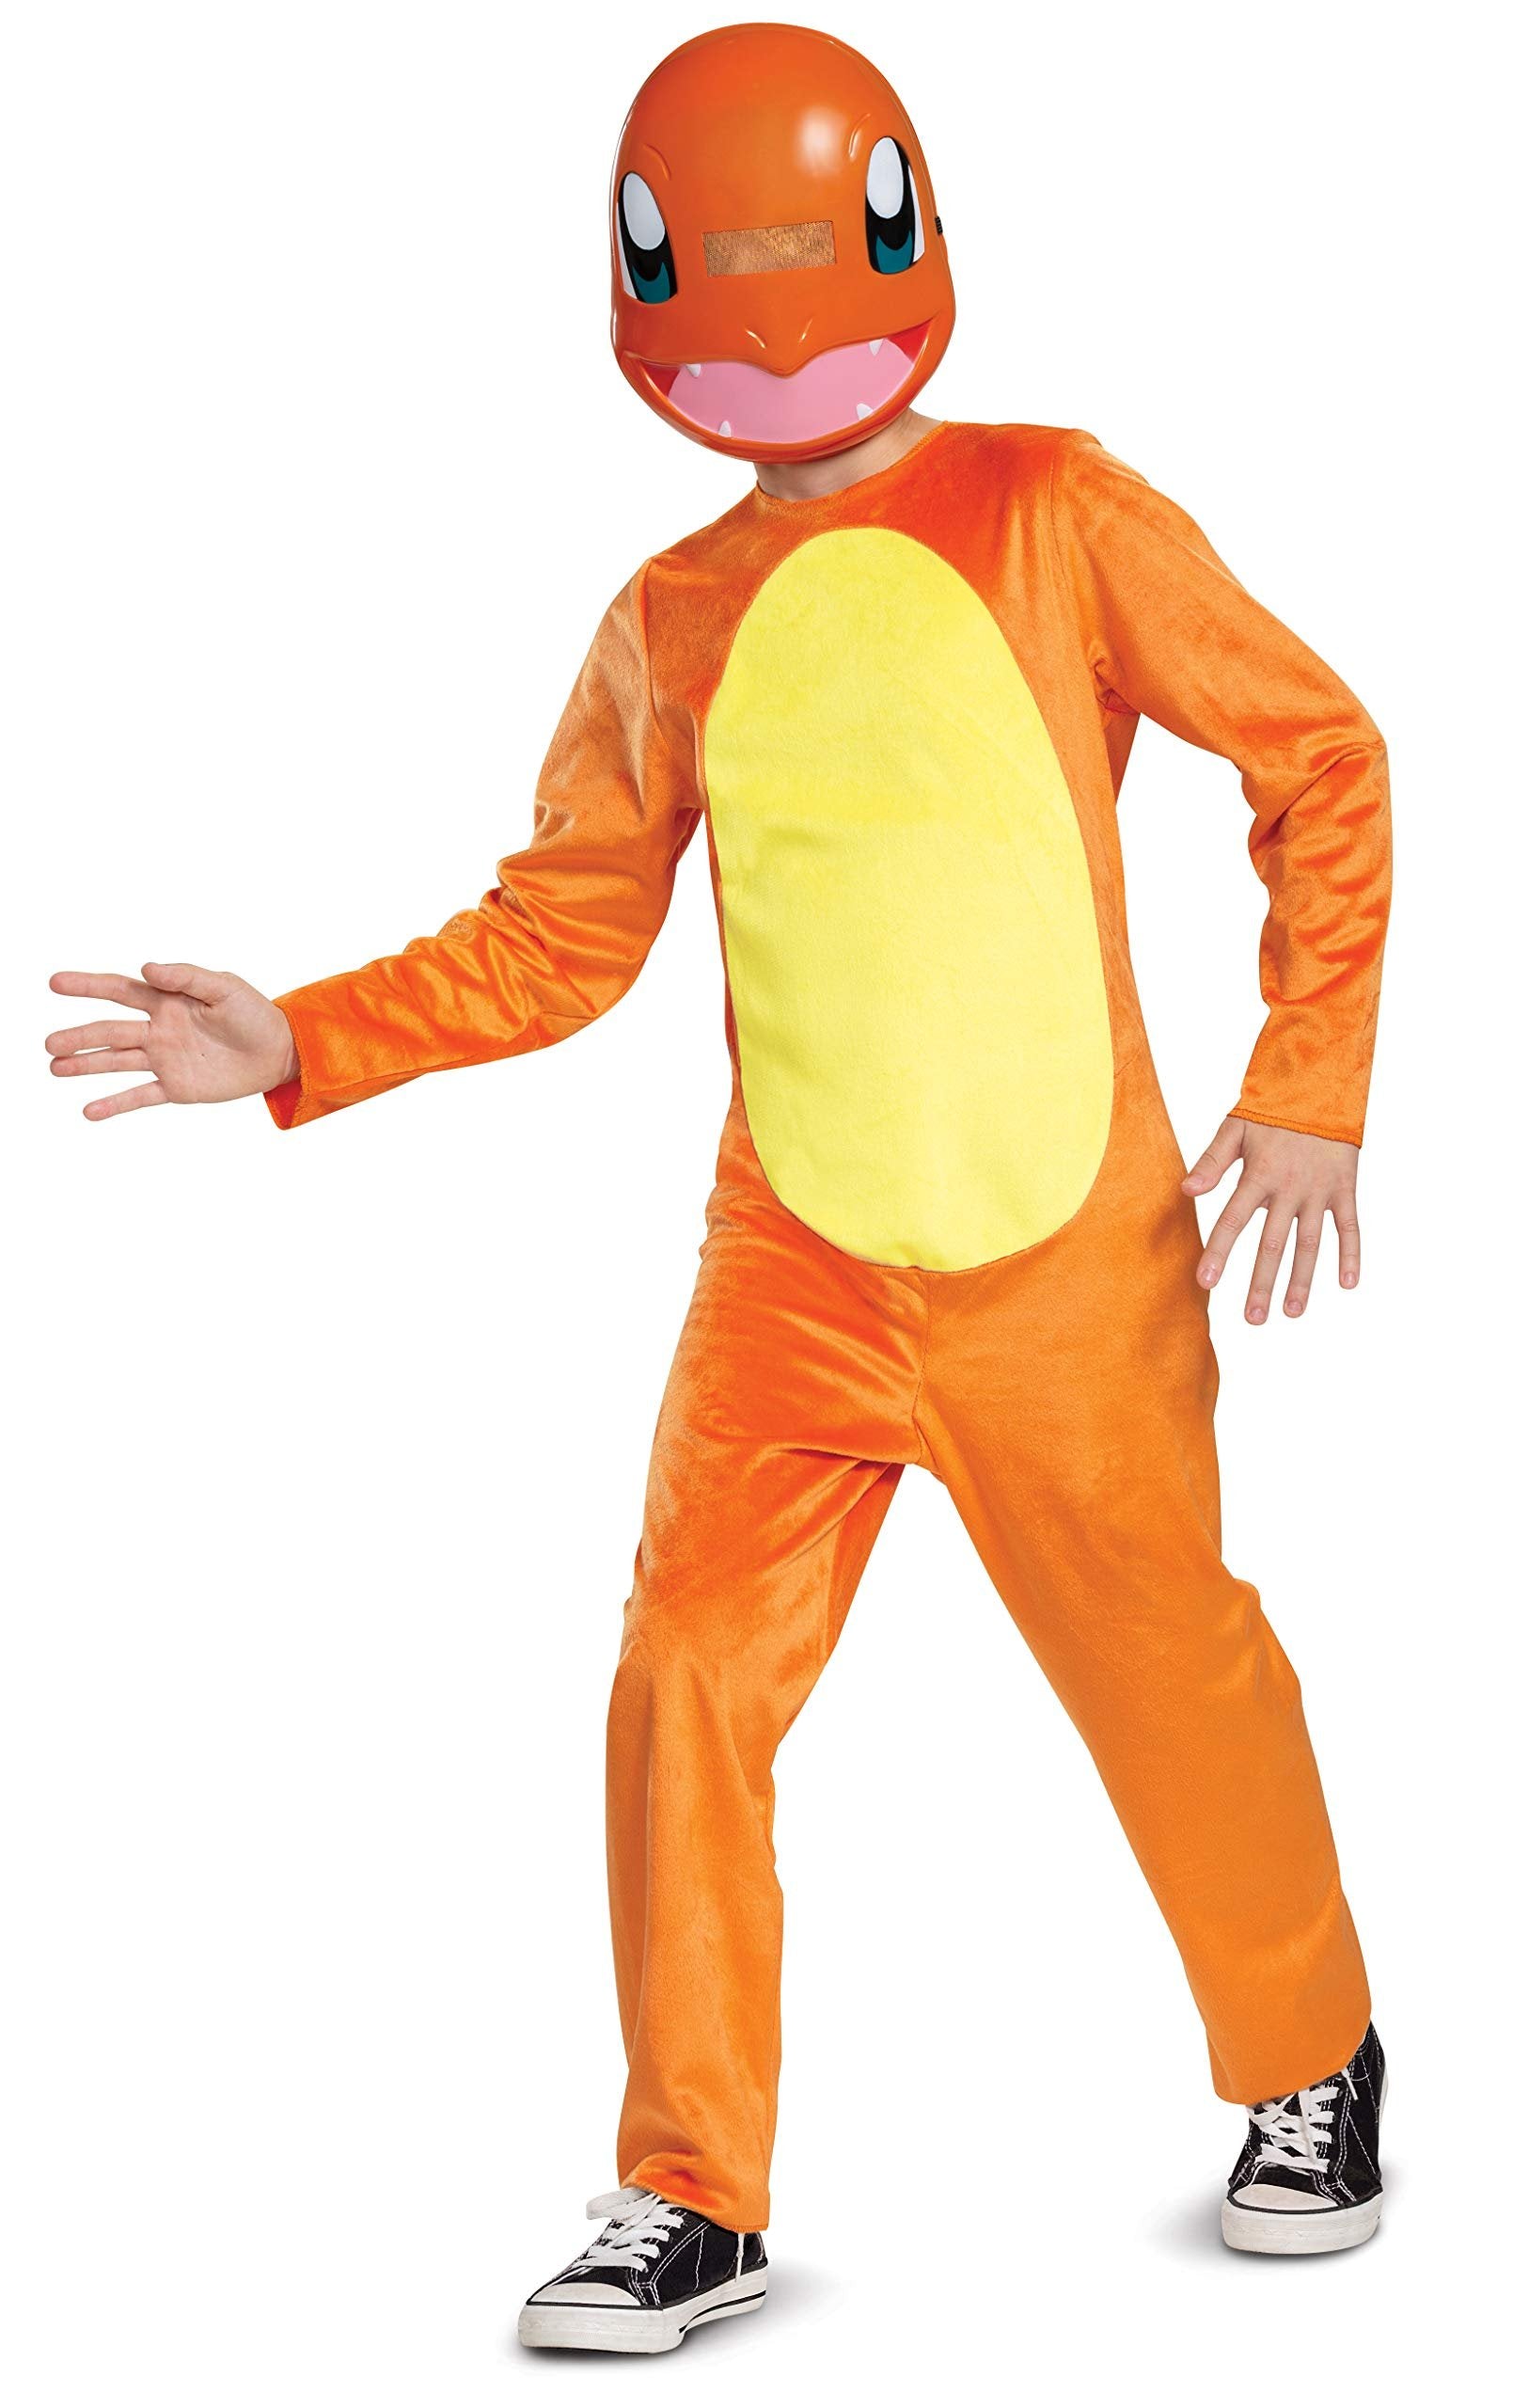 Pokemon Charmander Kids Costume, Children's Classic Character Outfit, Child Size Medium (7-8) Orange